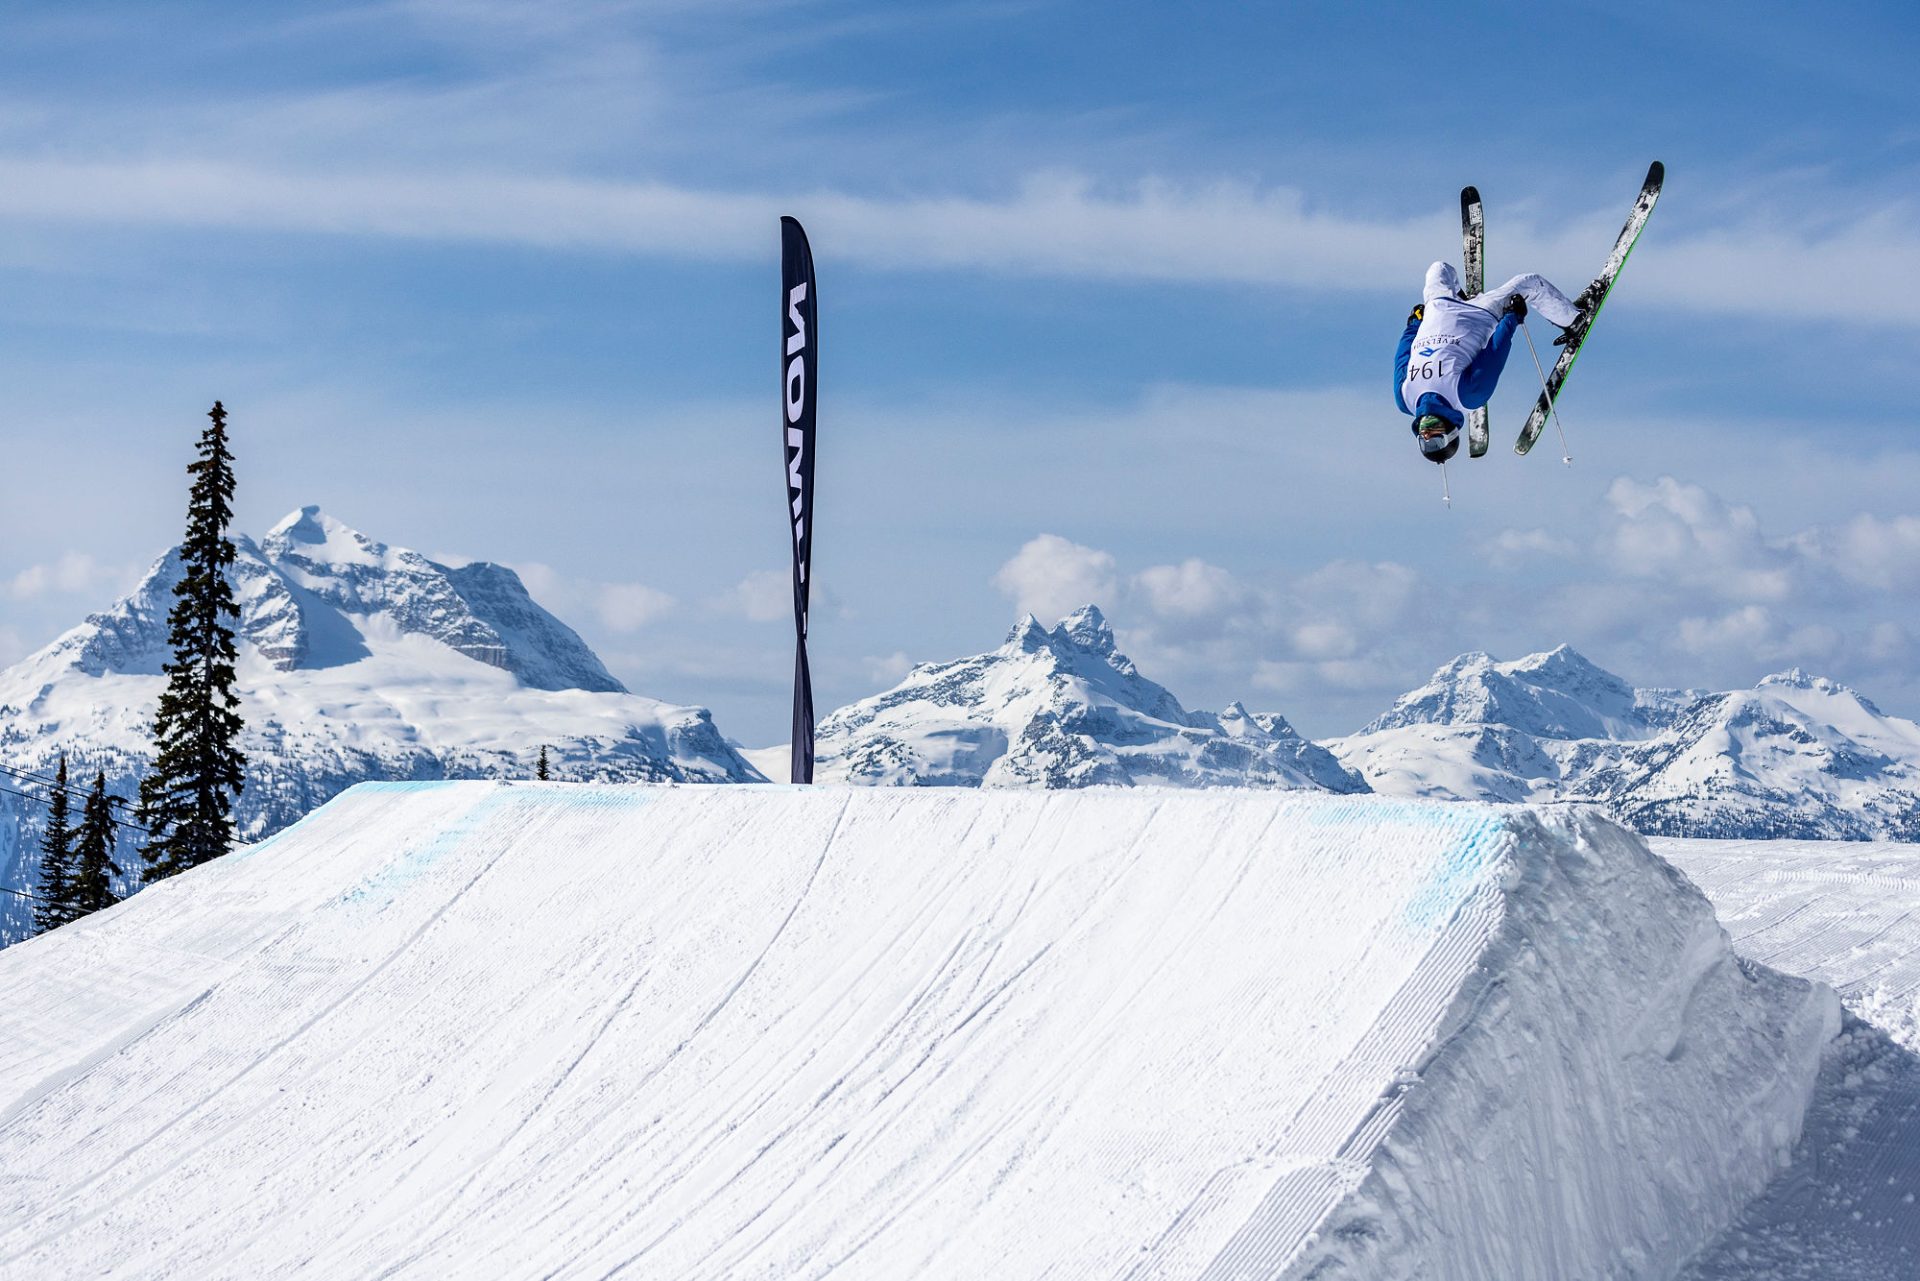 Skier gets big air at Revelstoke, BC